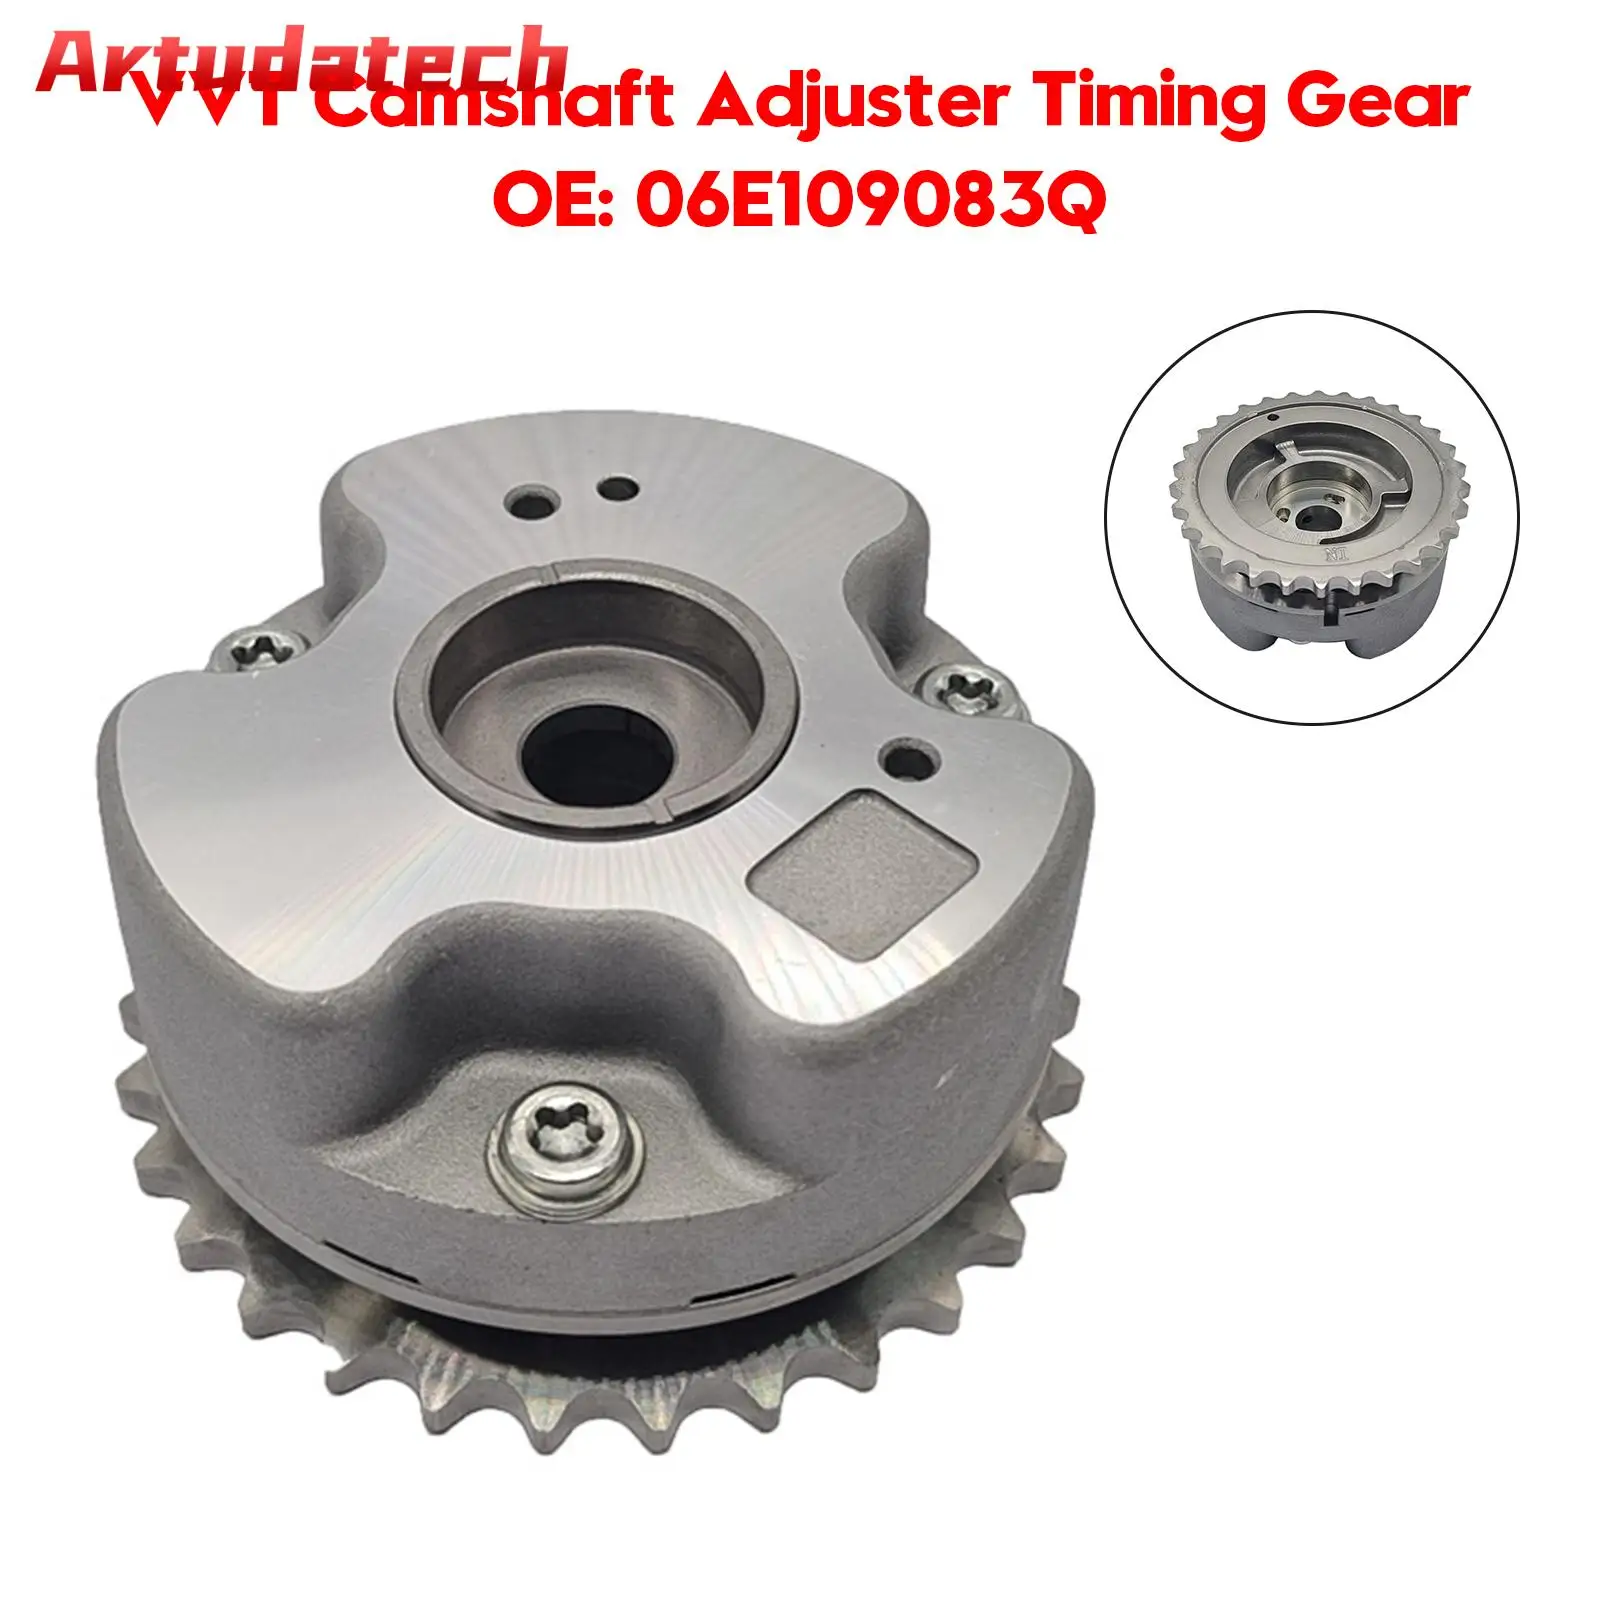 

Artudatech VVT Camshaft Adjuster Timing Gear for Audi A4 A5 Q5 A6 RS6 A7 RS7 Q7 A8 06E109083Q